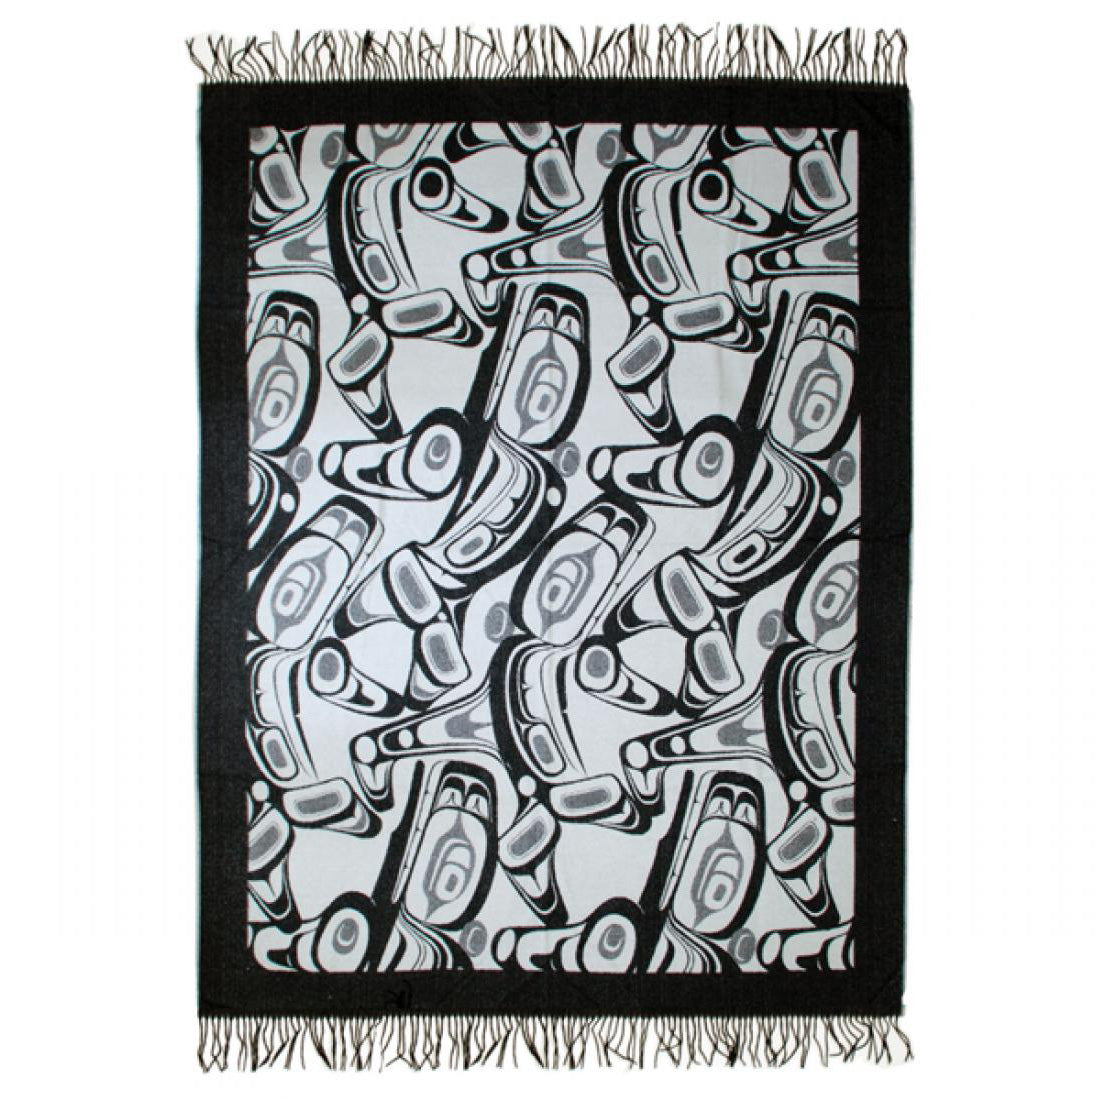 Native Art Blanket - Orca by Kelly Robinson (Grey/Black)